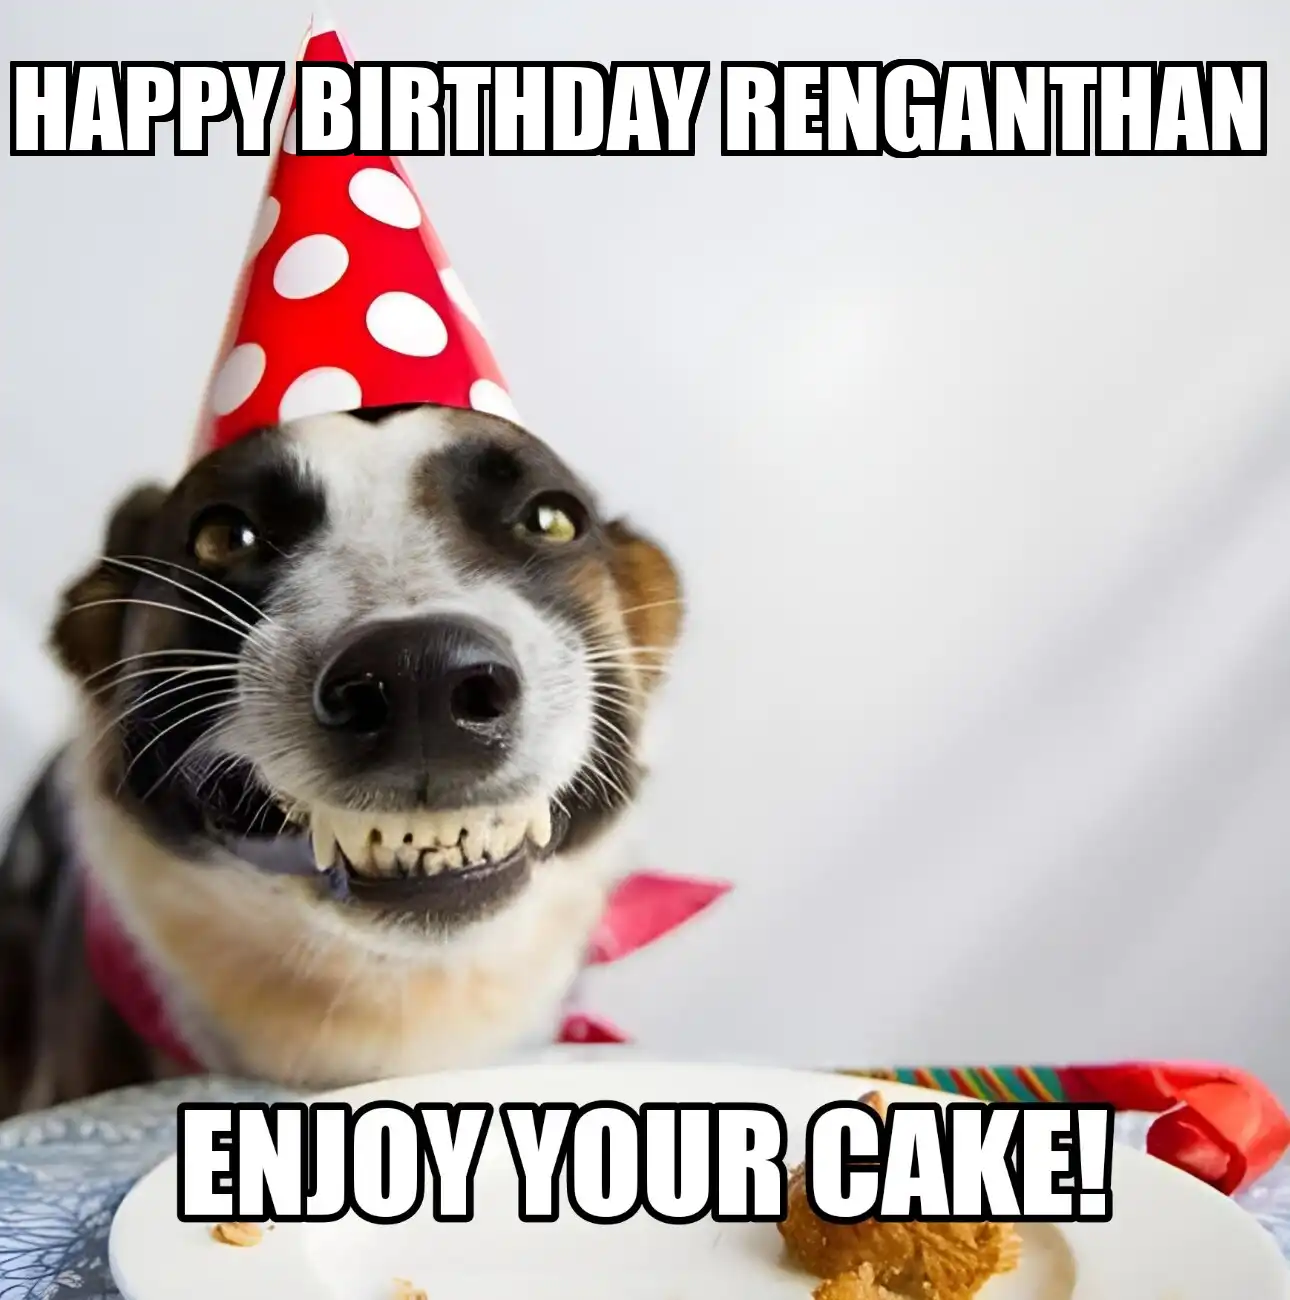 Happy Birthday Renganthan Enjoy Your Cake Dog Meme